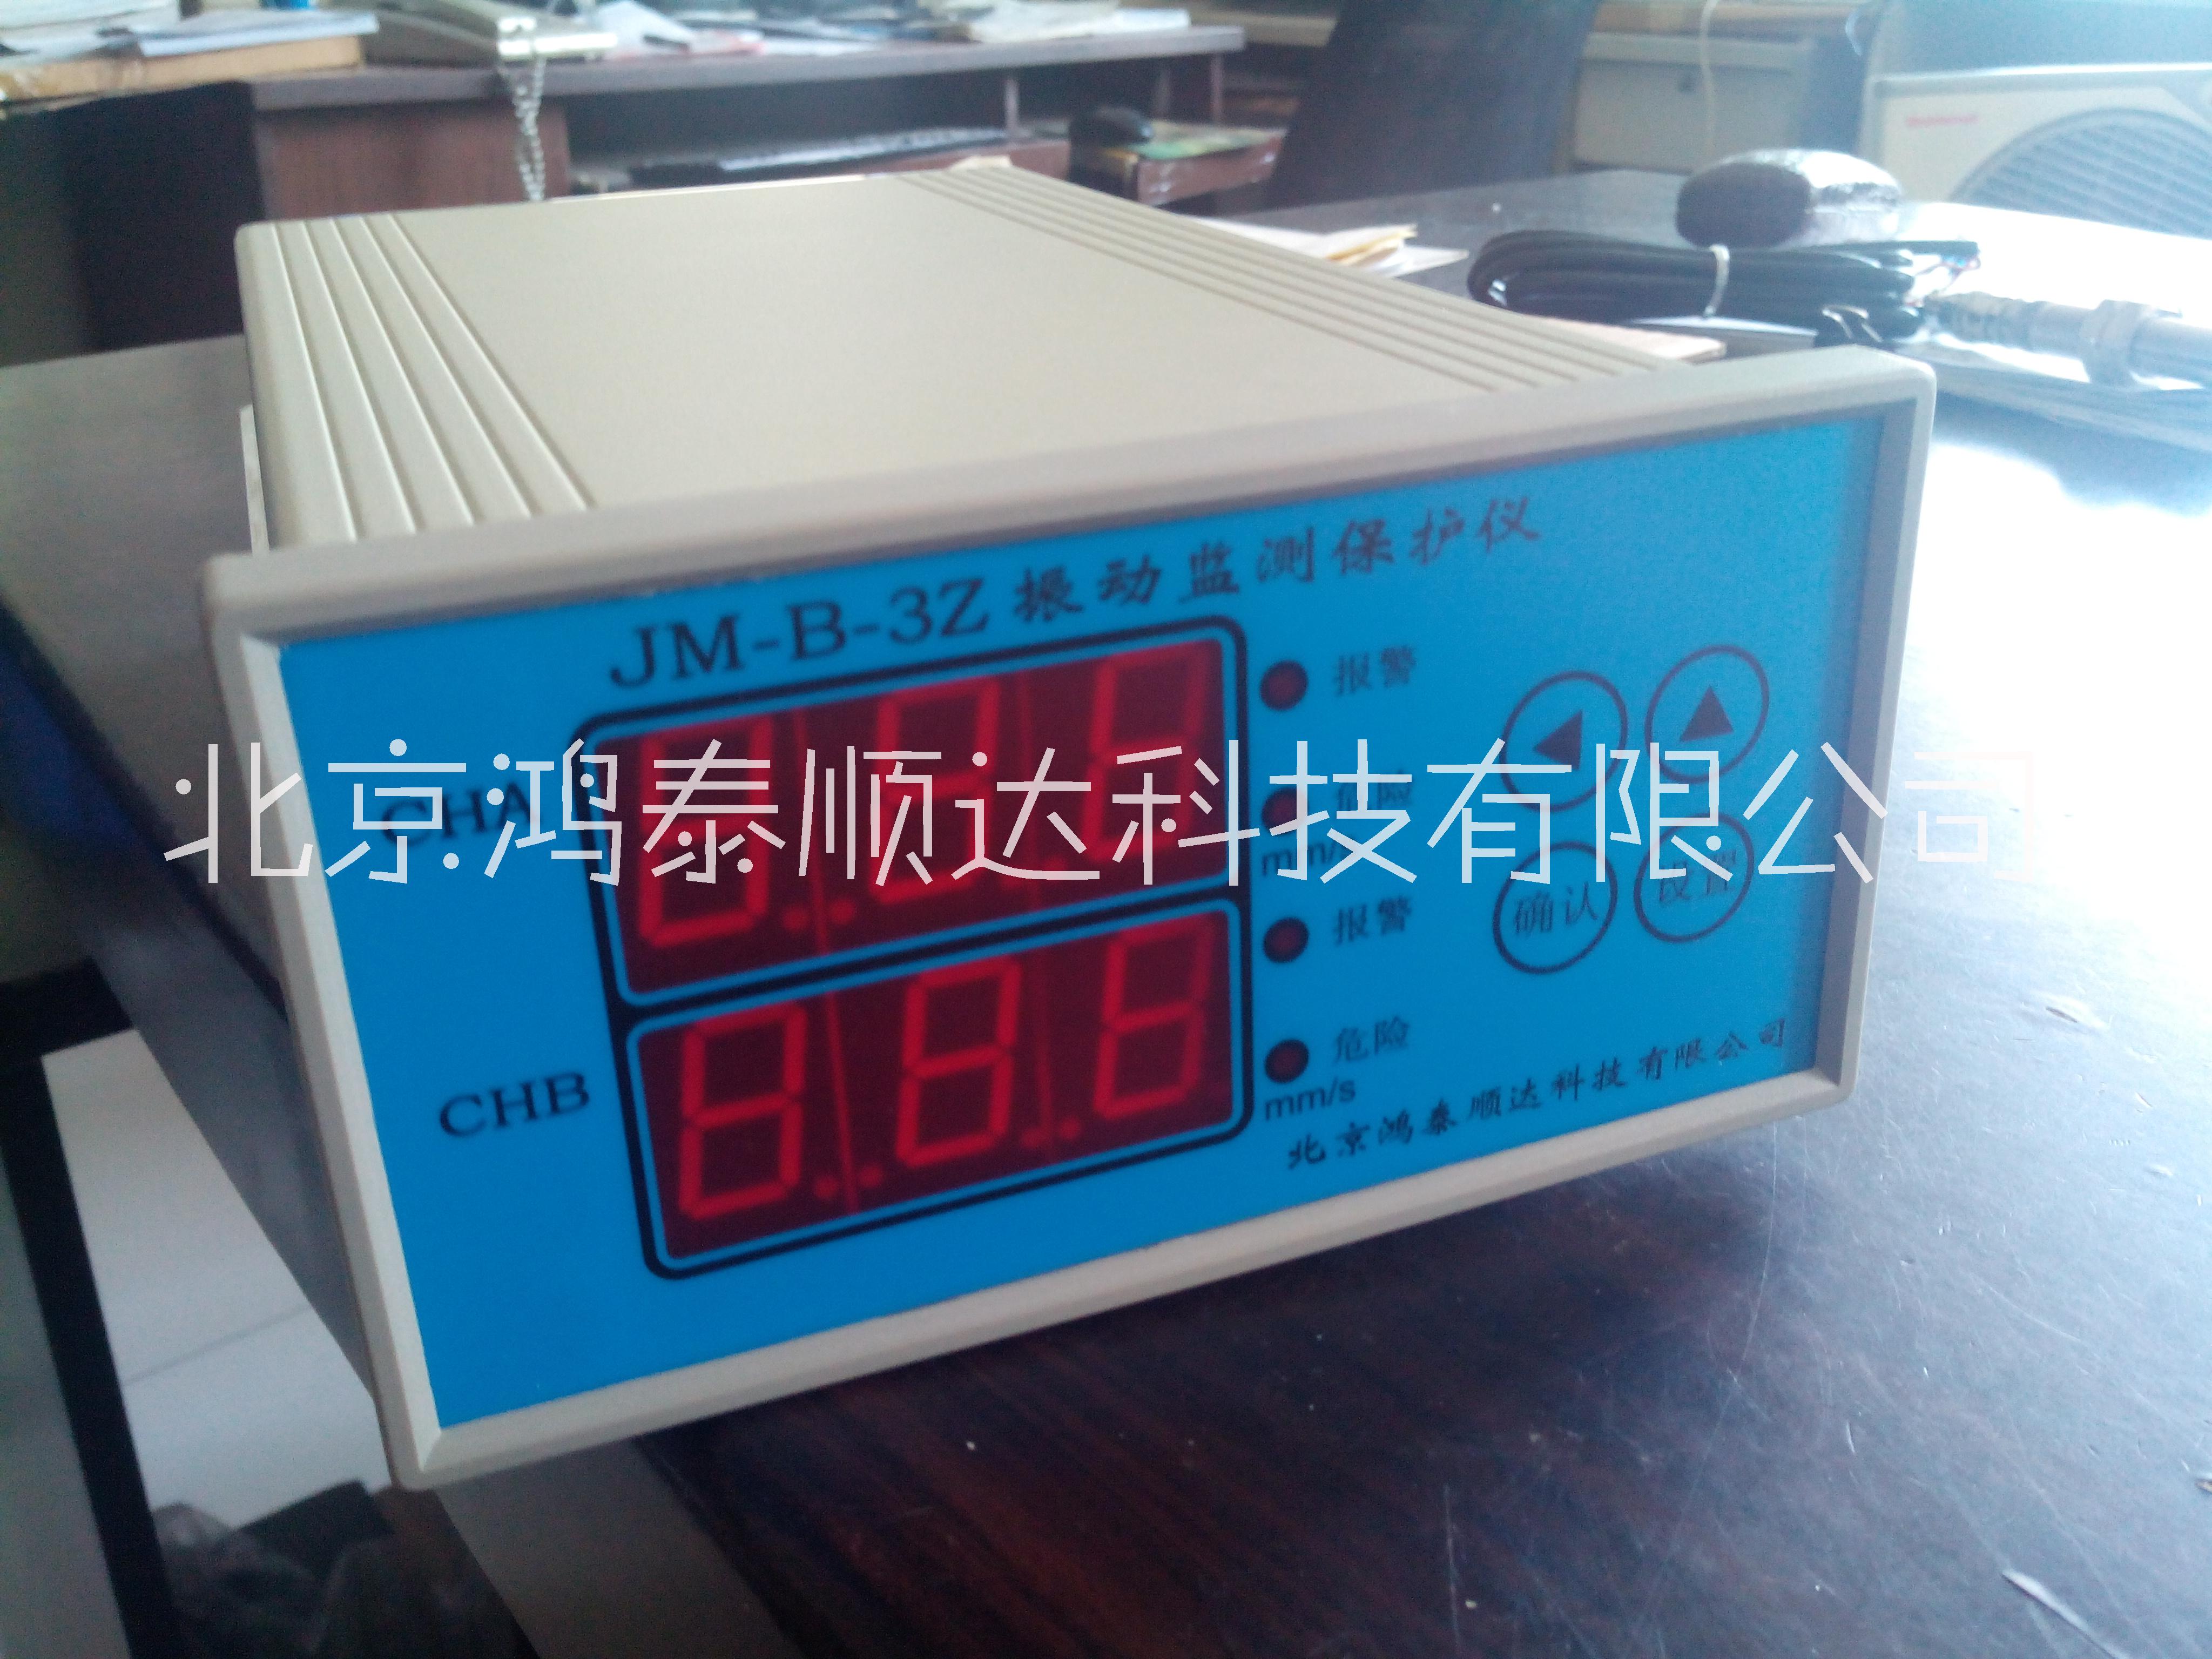 ATMWK-ⅡB温度控制仪优选北京鸿泰顺达科技；ATMWK-ⅡB温度控制仪市场价格|经销价格|询价电话